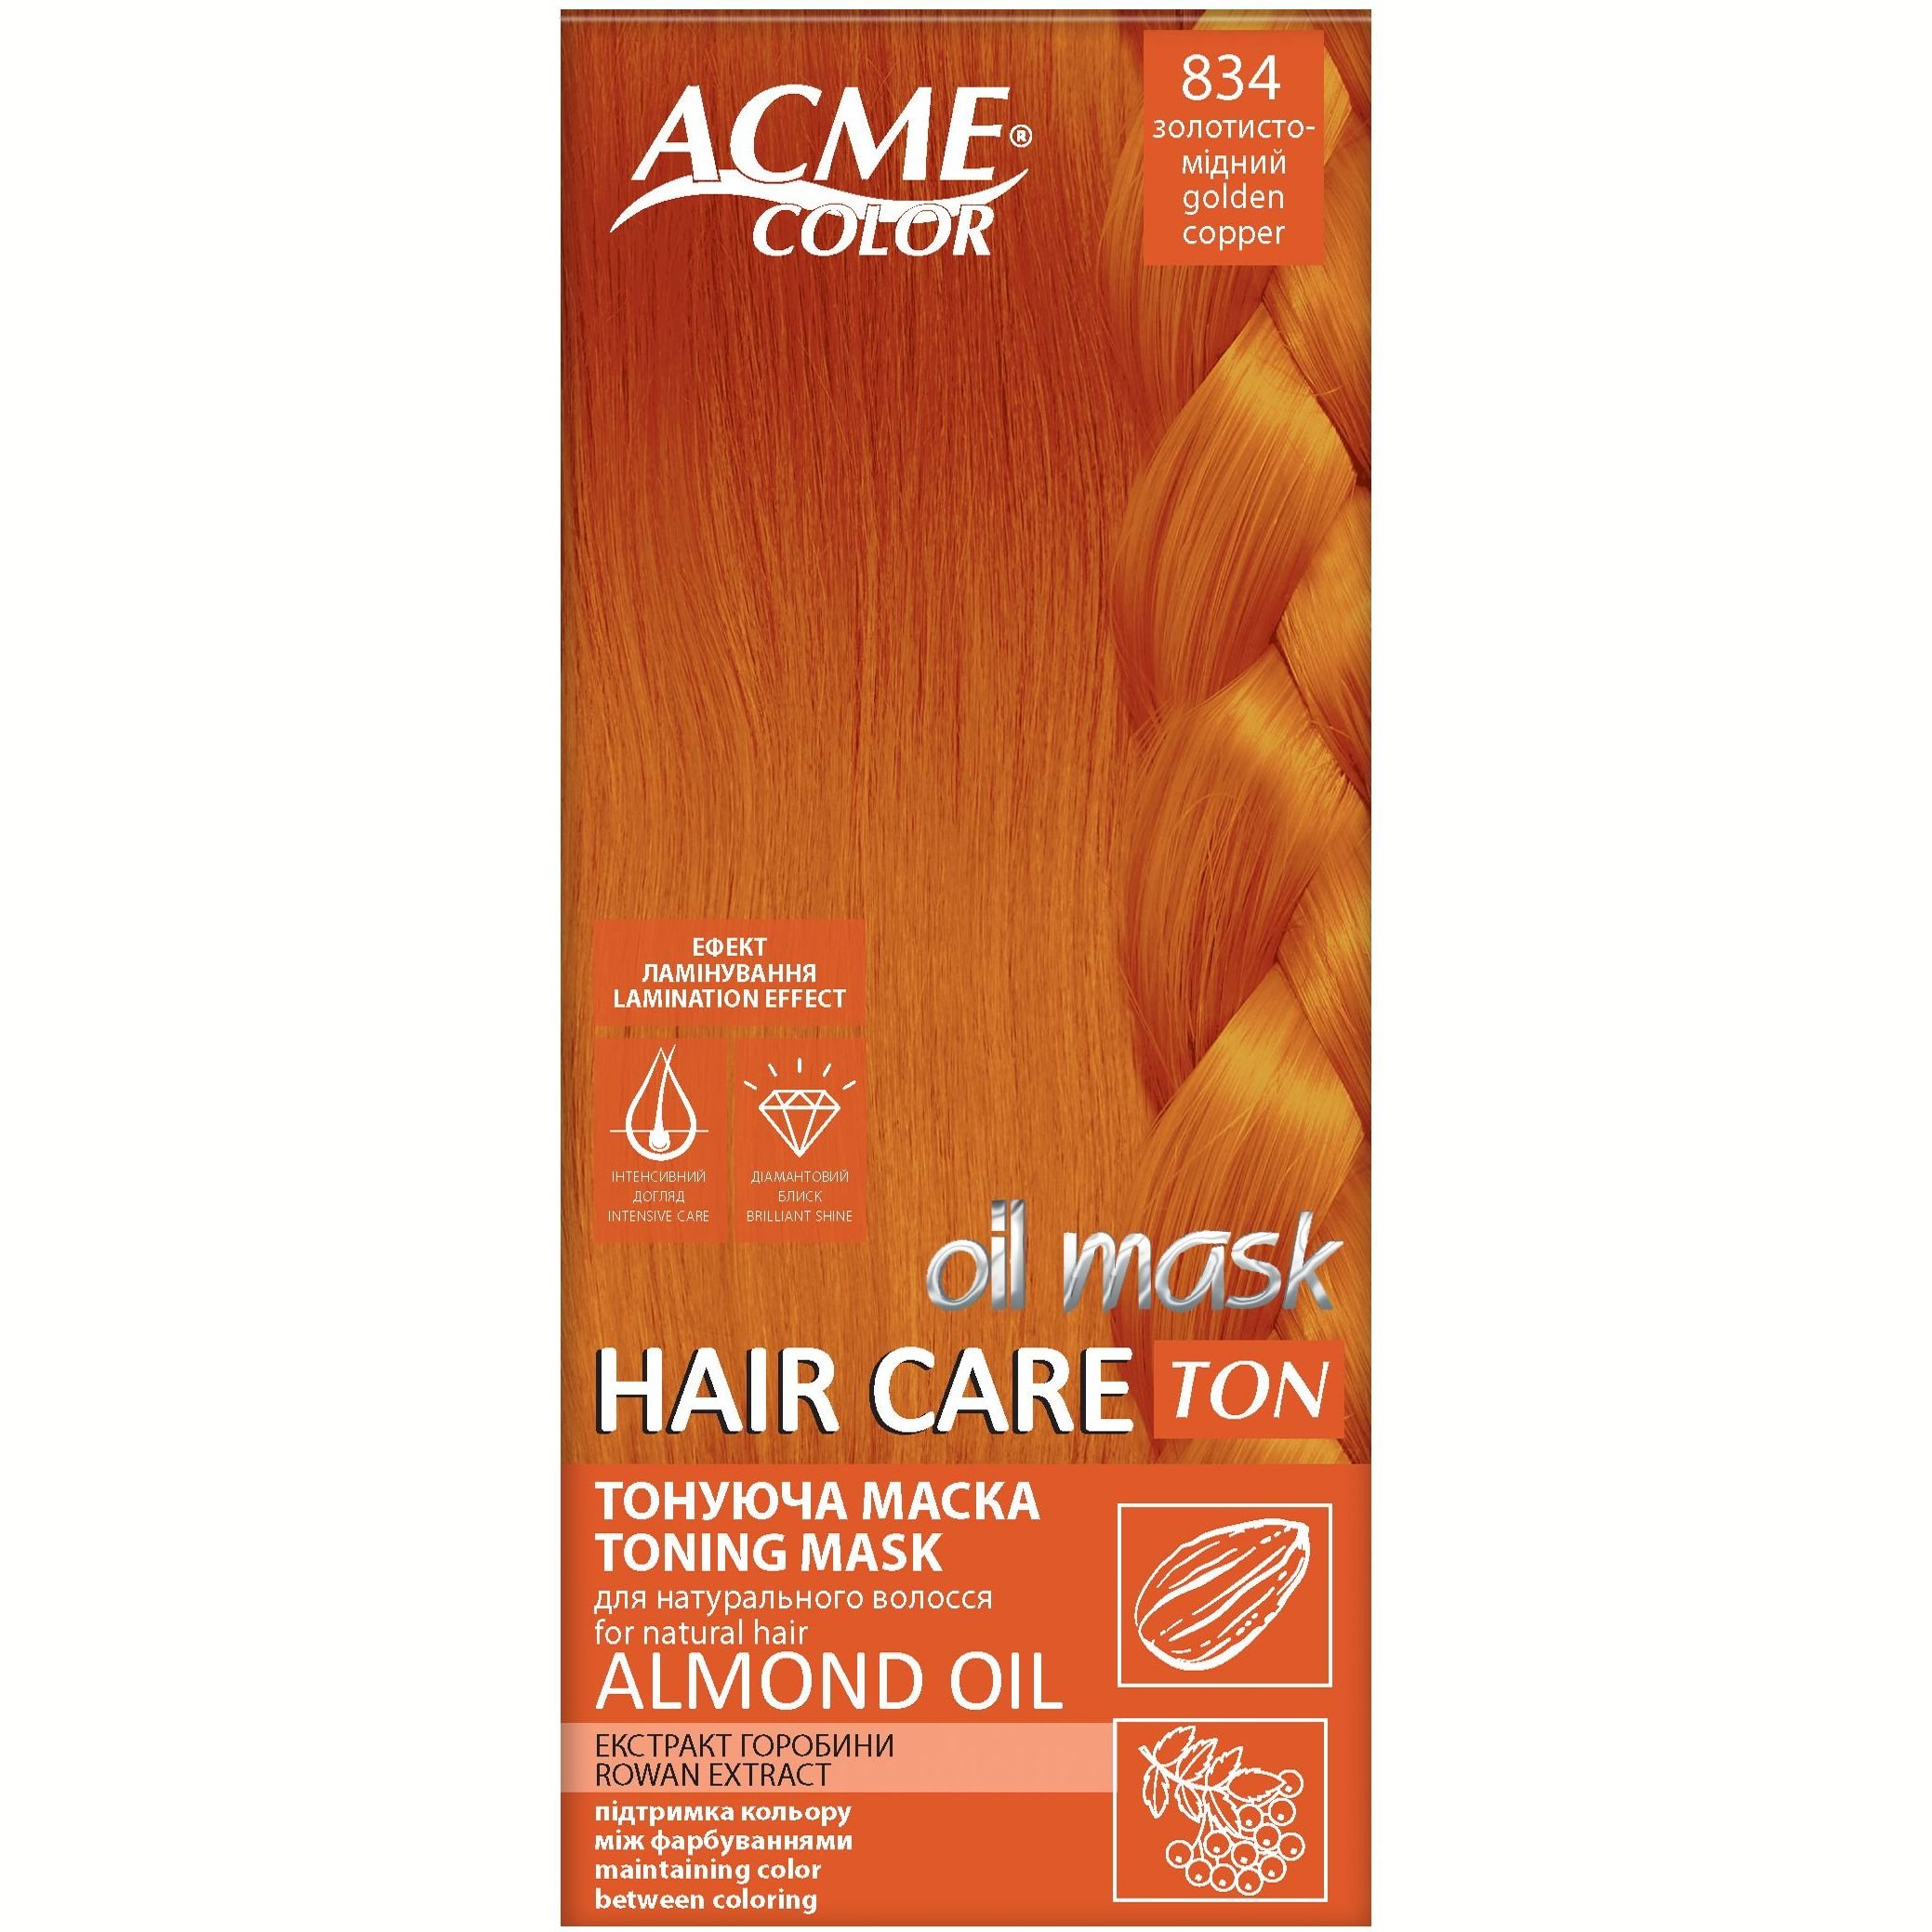 Тонирующая маска для волос Acme Color Hair Care Ton oil mask, тон 834, золотисто-медный, 30 мл - фото 1